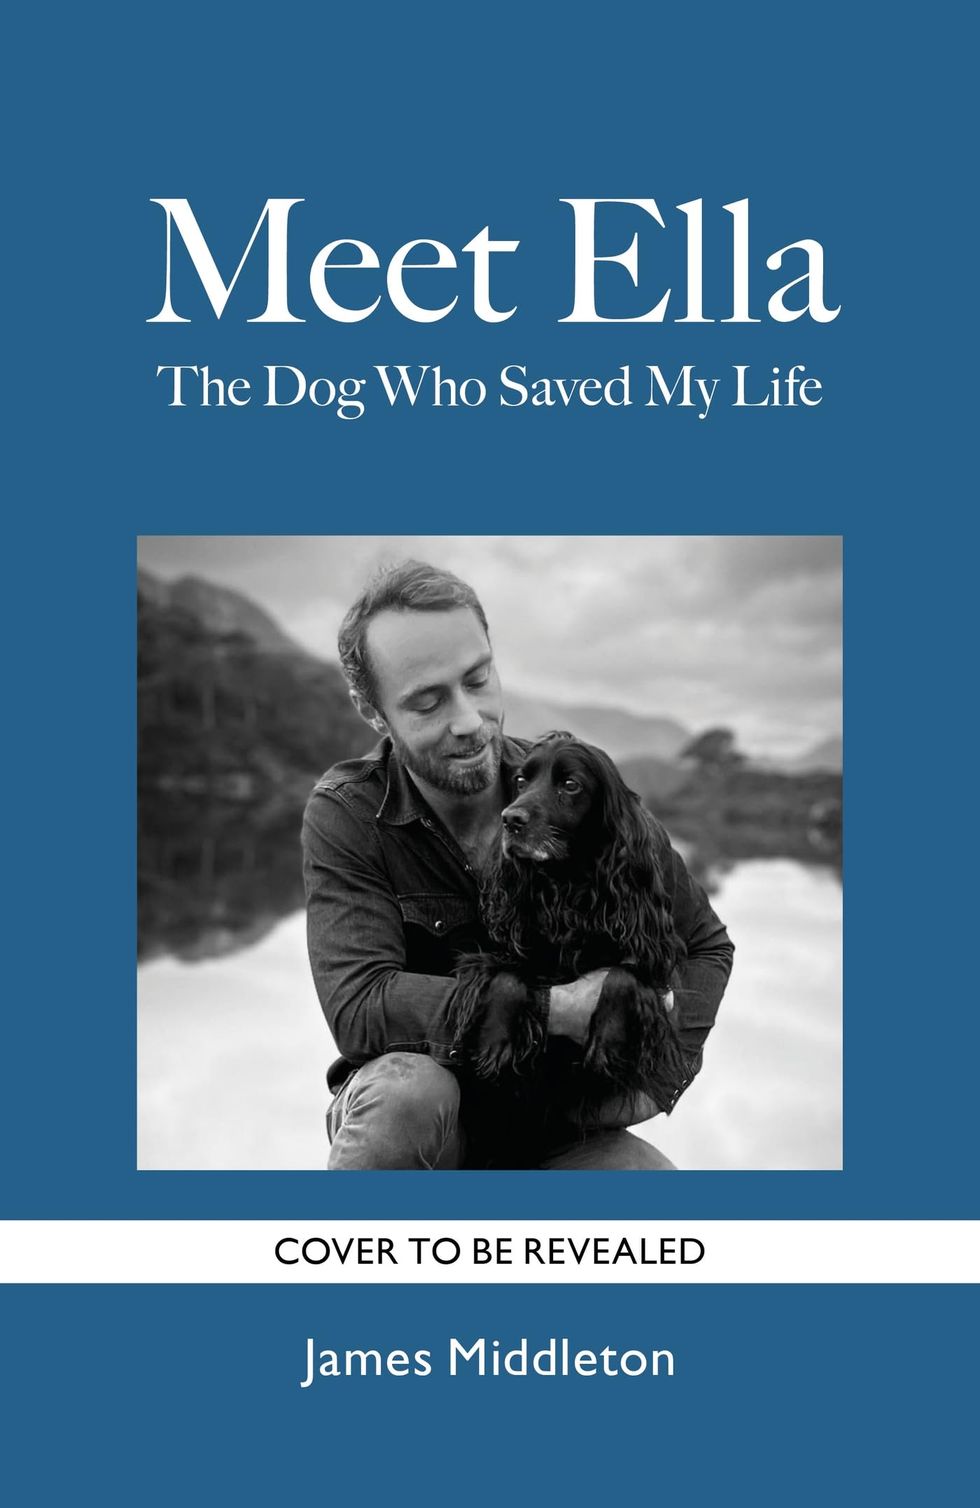 Meet Ella: The Dog Who Saved My Life